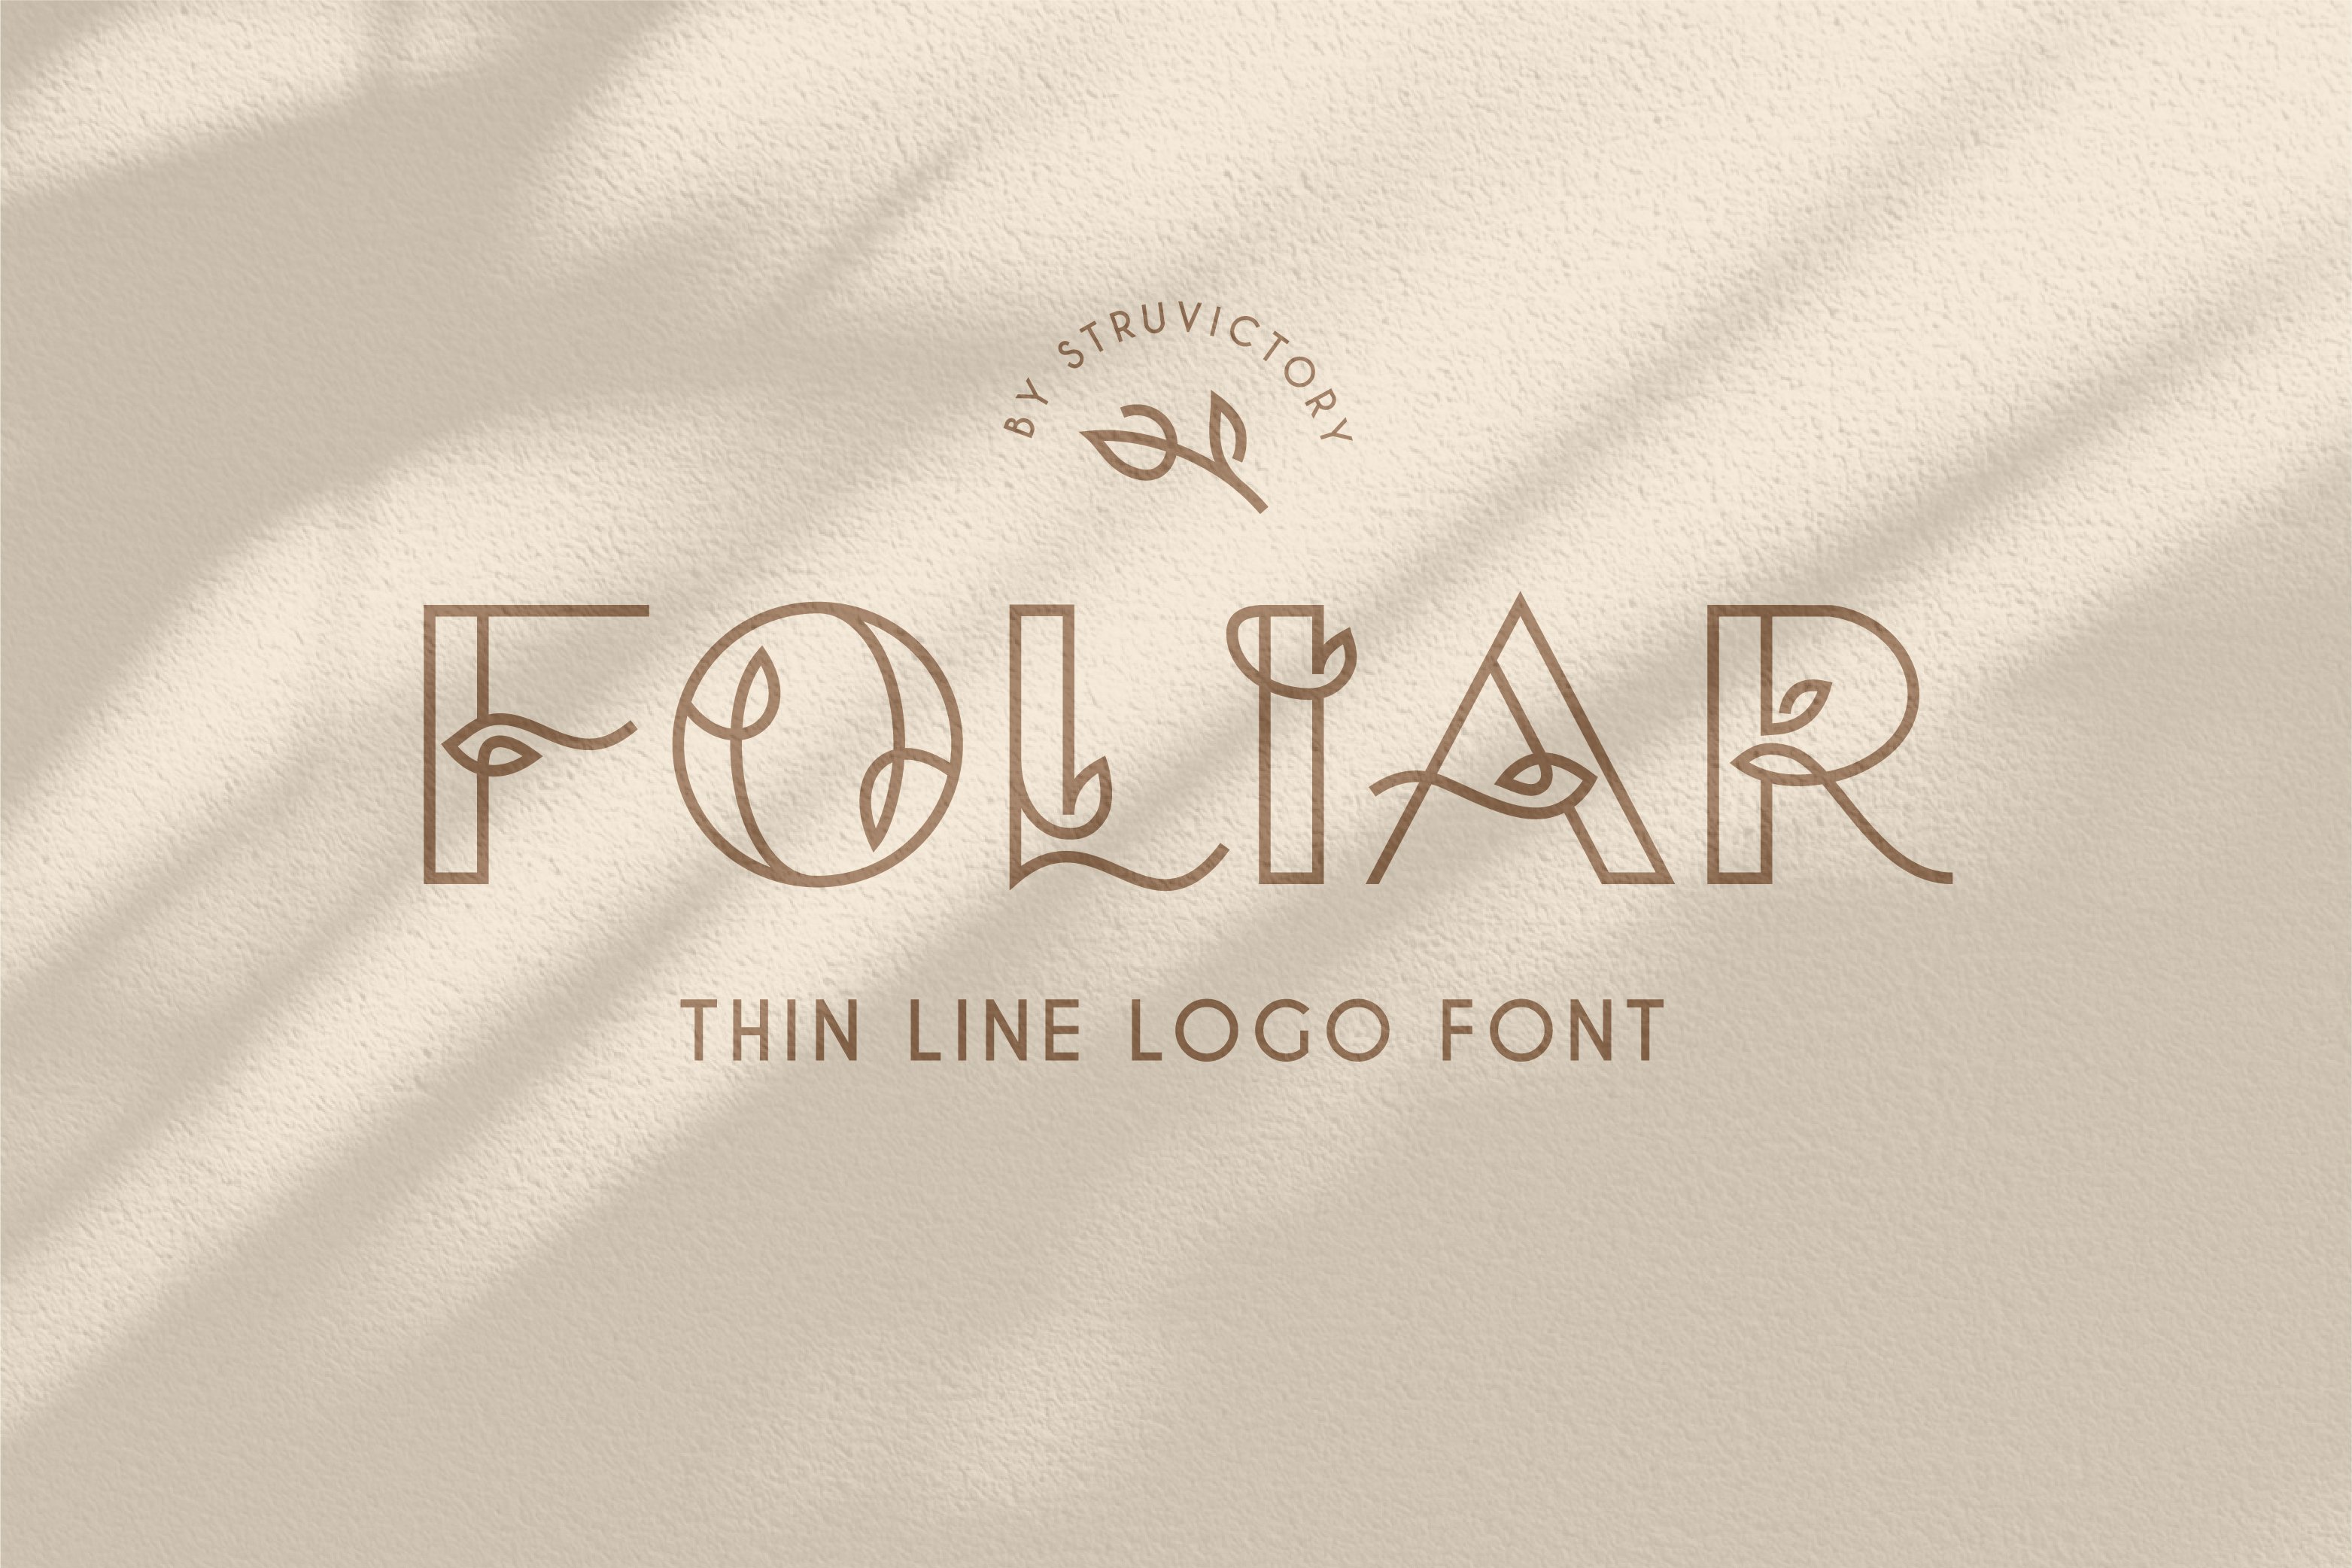 Foliar - Thin Line Logo Font cover image.